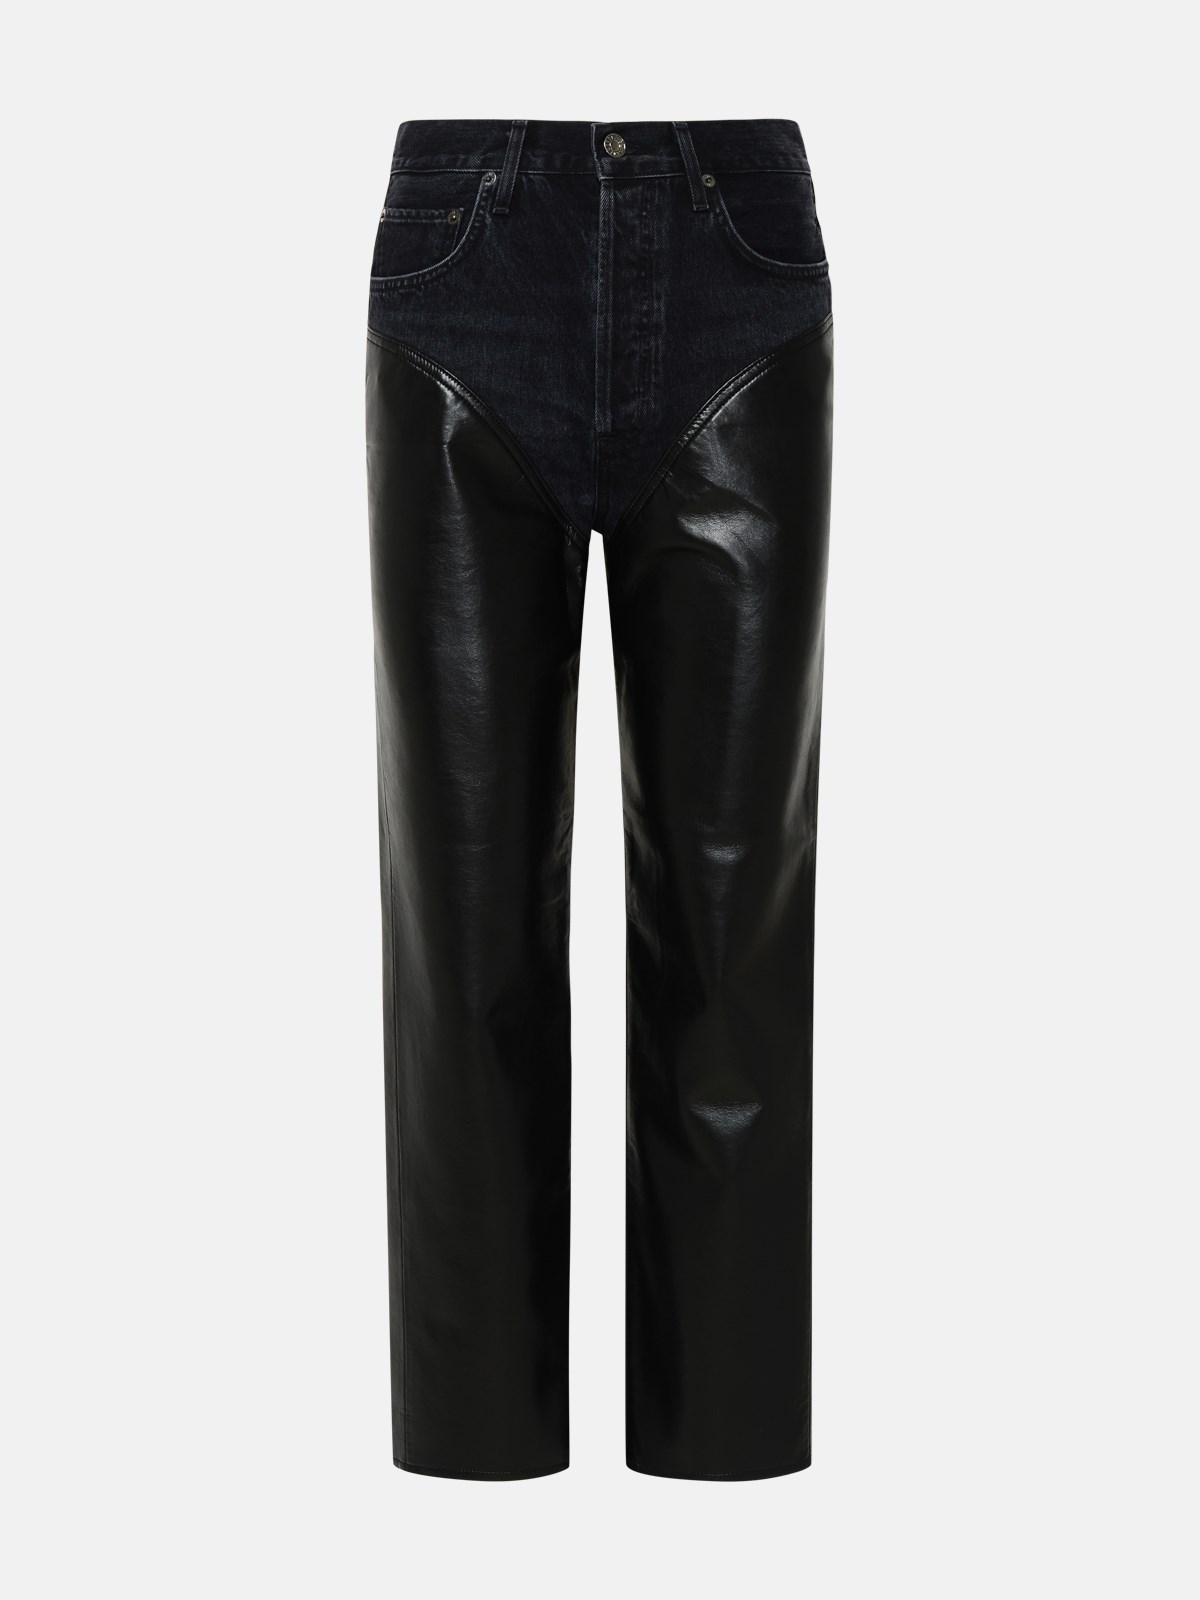 Agolde Black Leather Blend Cashmere Jeans